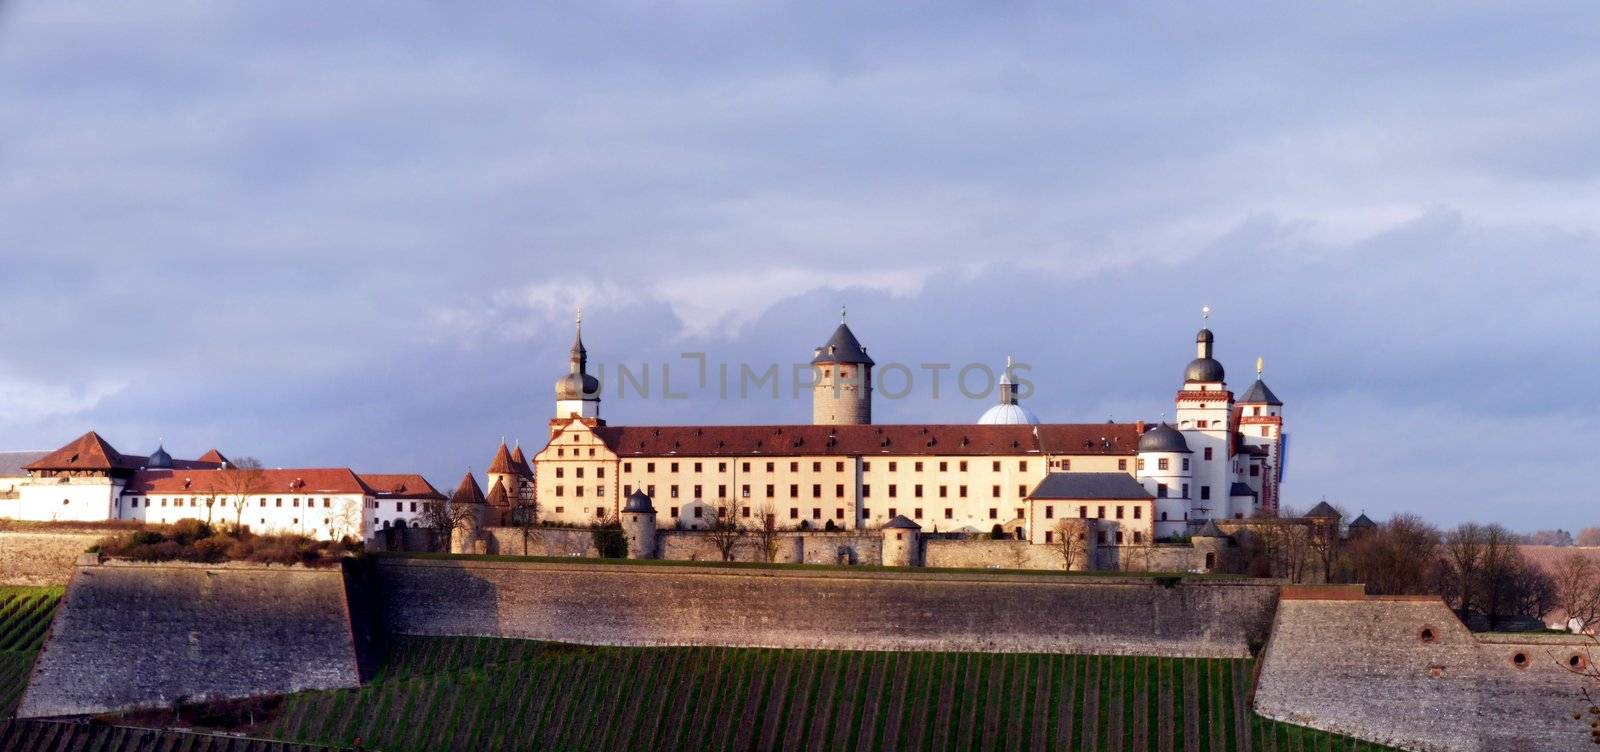 Festung Marienberg on a hill over the city Wuerzburg